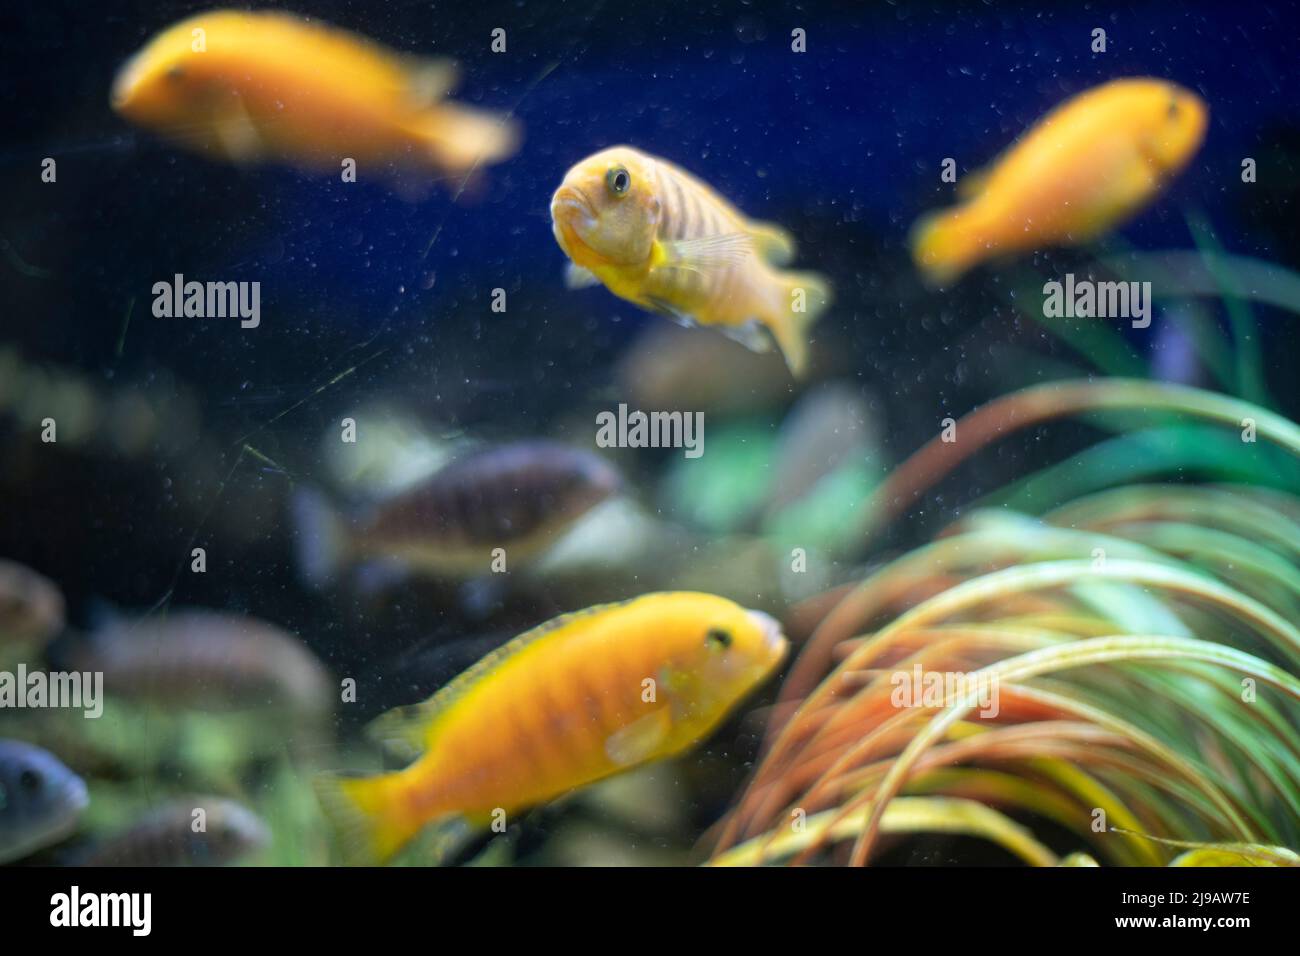 Marine fish in aquarium. Fish swim in water. Details of life under water. Stock Photo